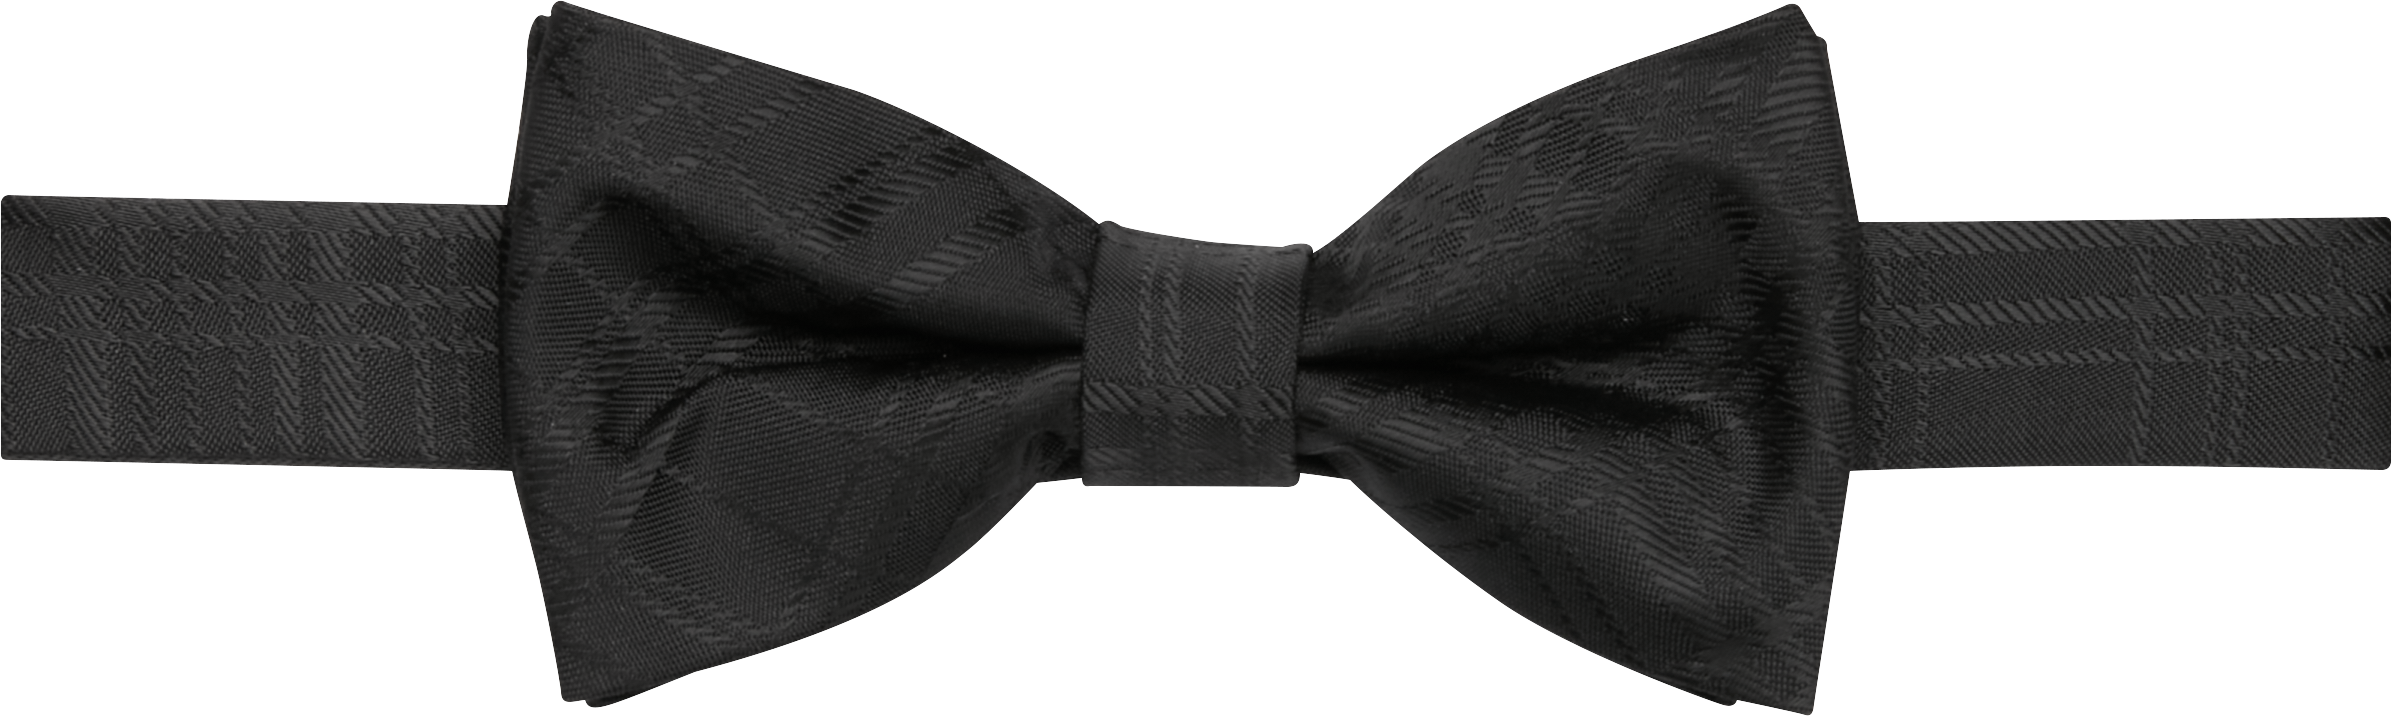 Pre-Tied Plaid Bow Tie